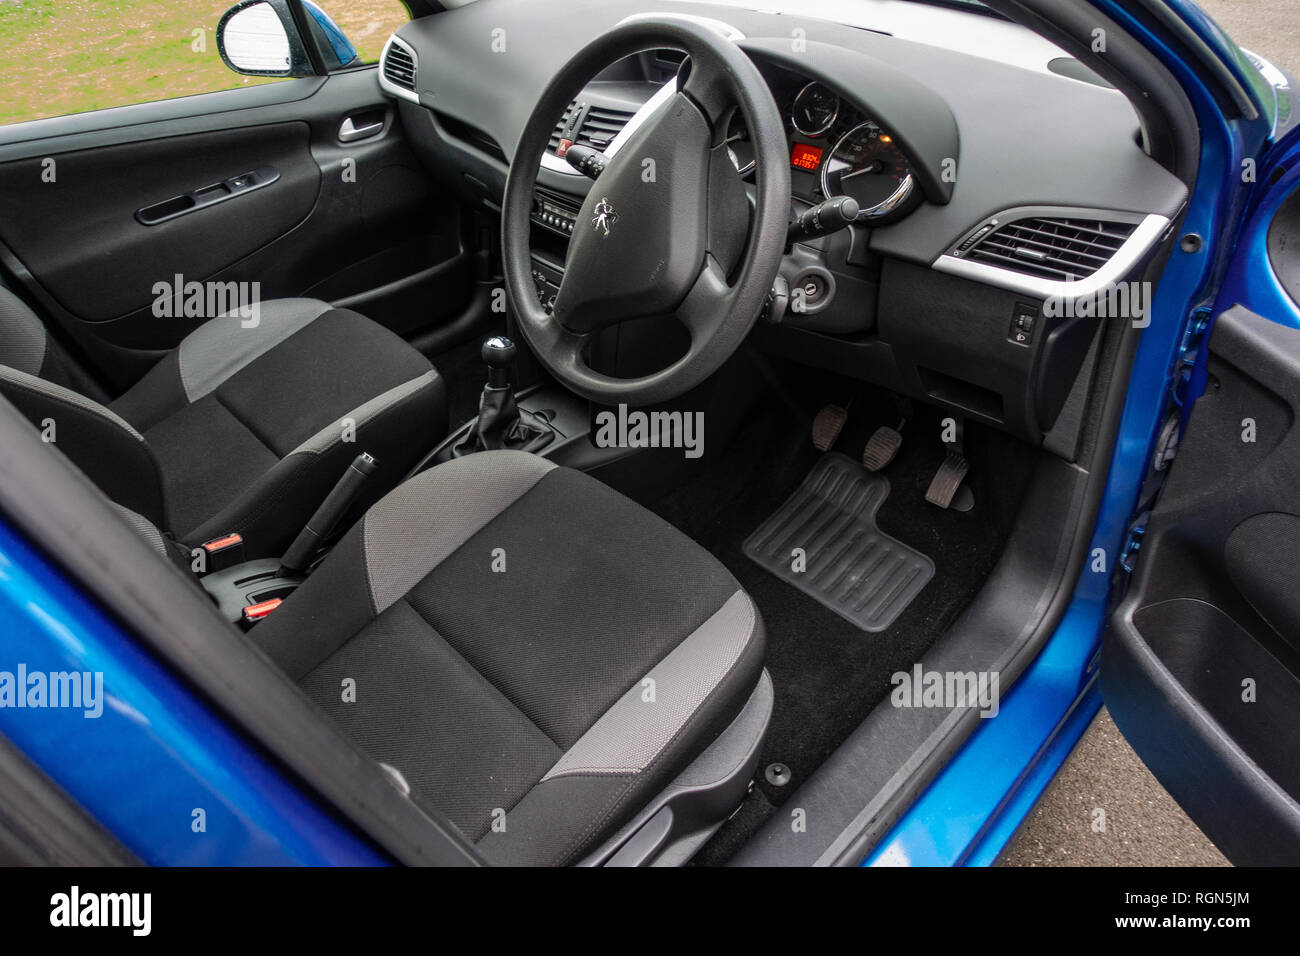 Interior of the Peugeot 207 5 door 2009 car Stock Photo - Alamy